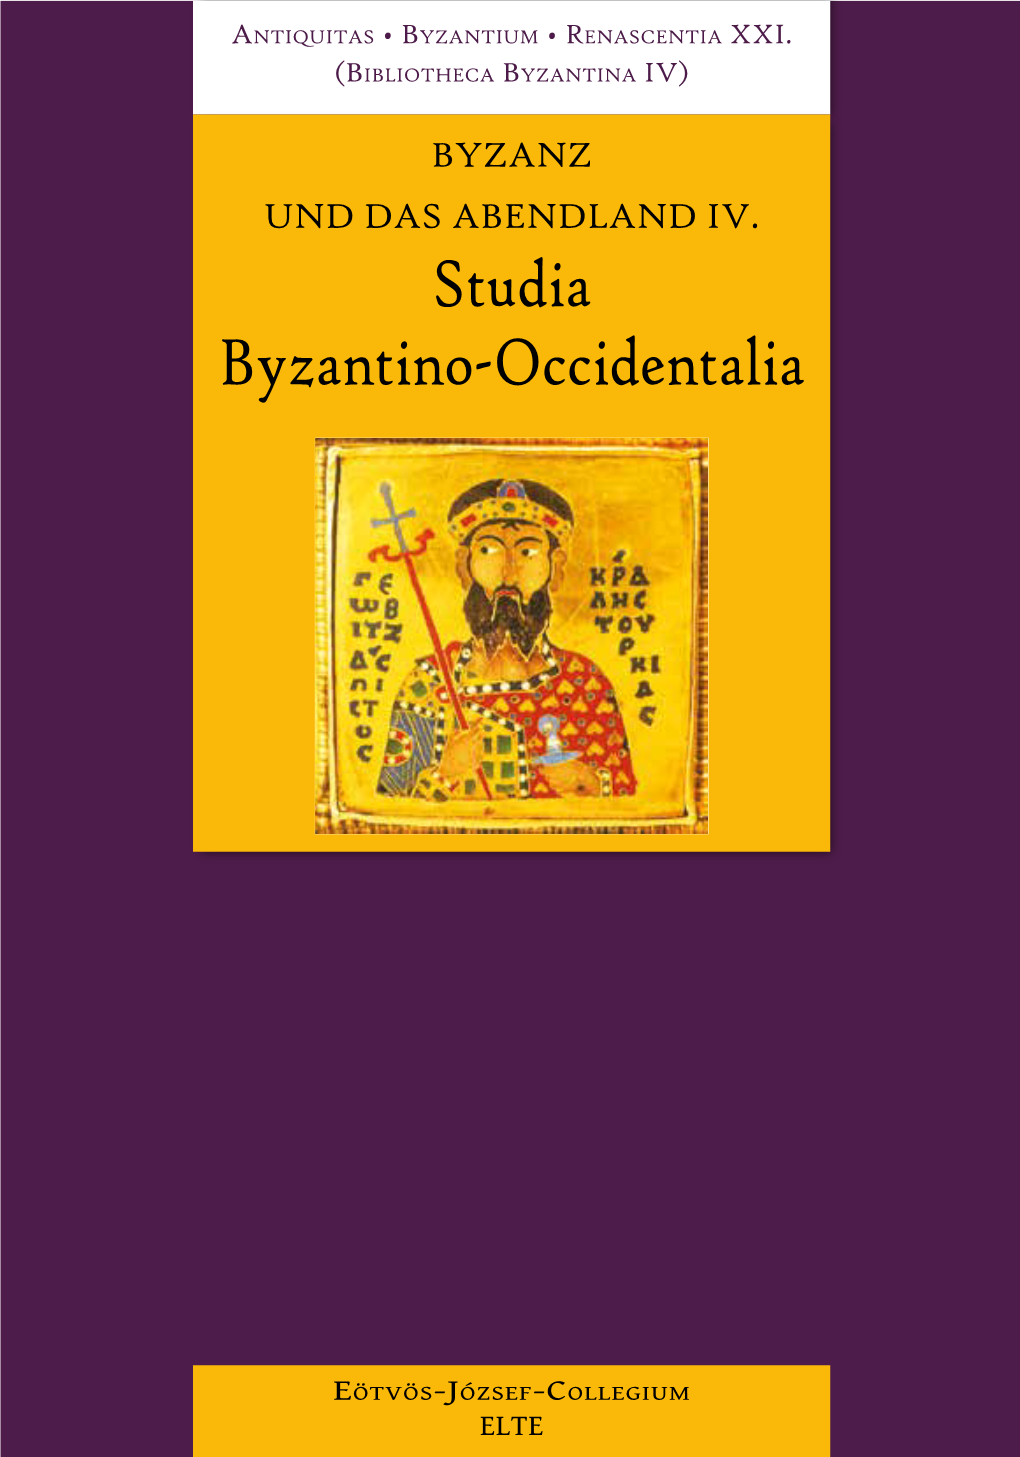 Studia Byzantino-Occidentalia Byzantino-Occidentalia a Ntiquitas UND DASABENDLANDIV